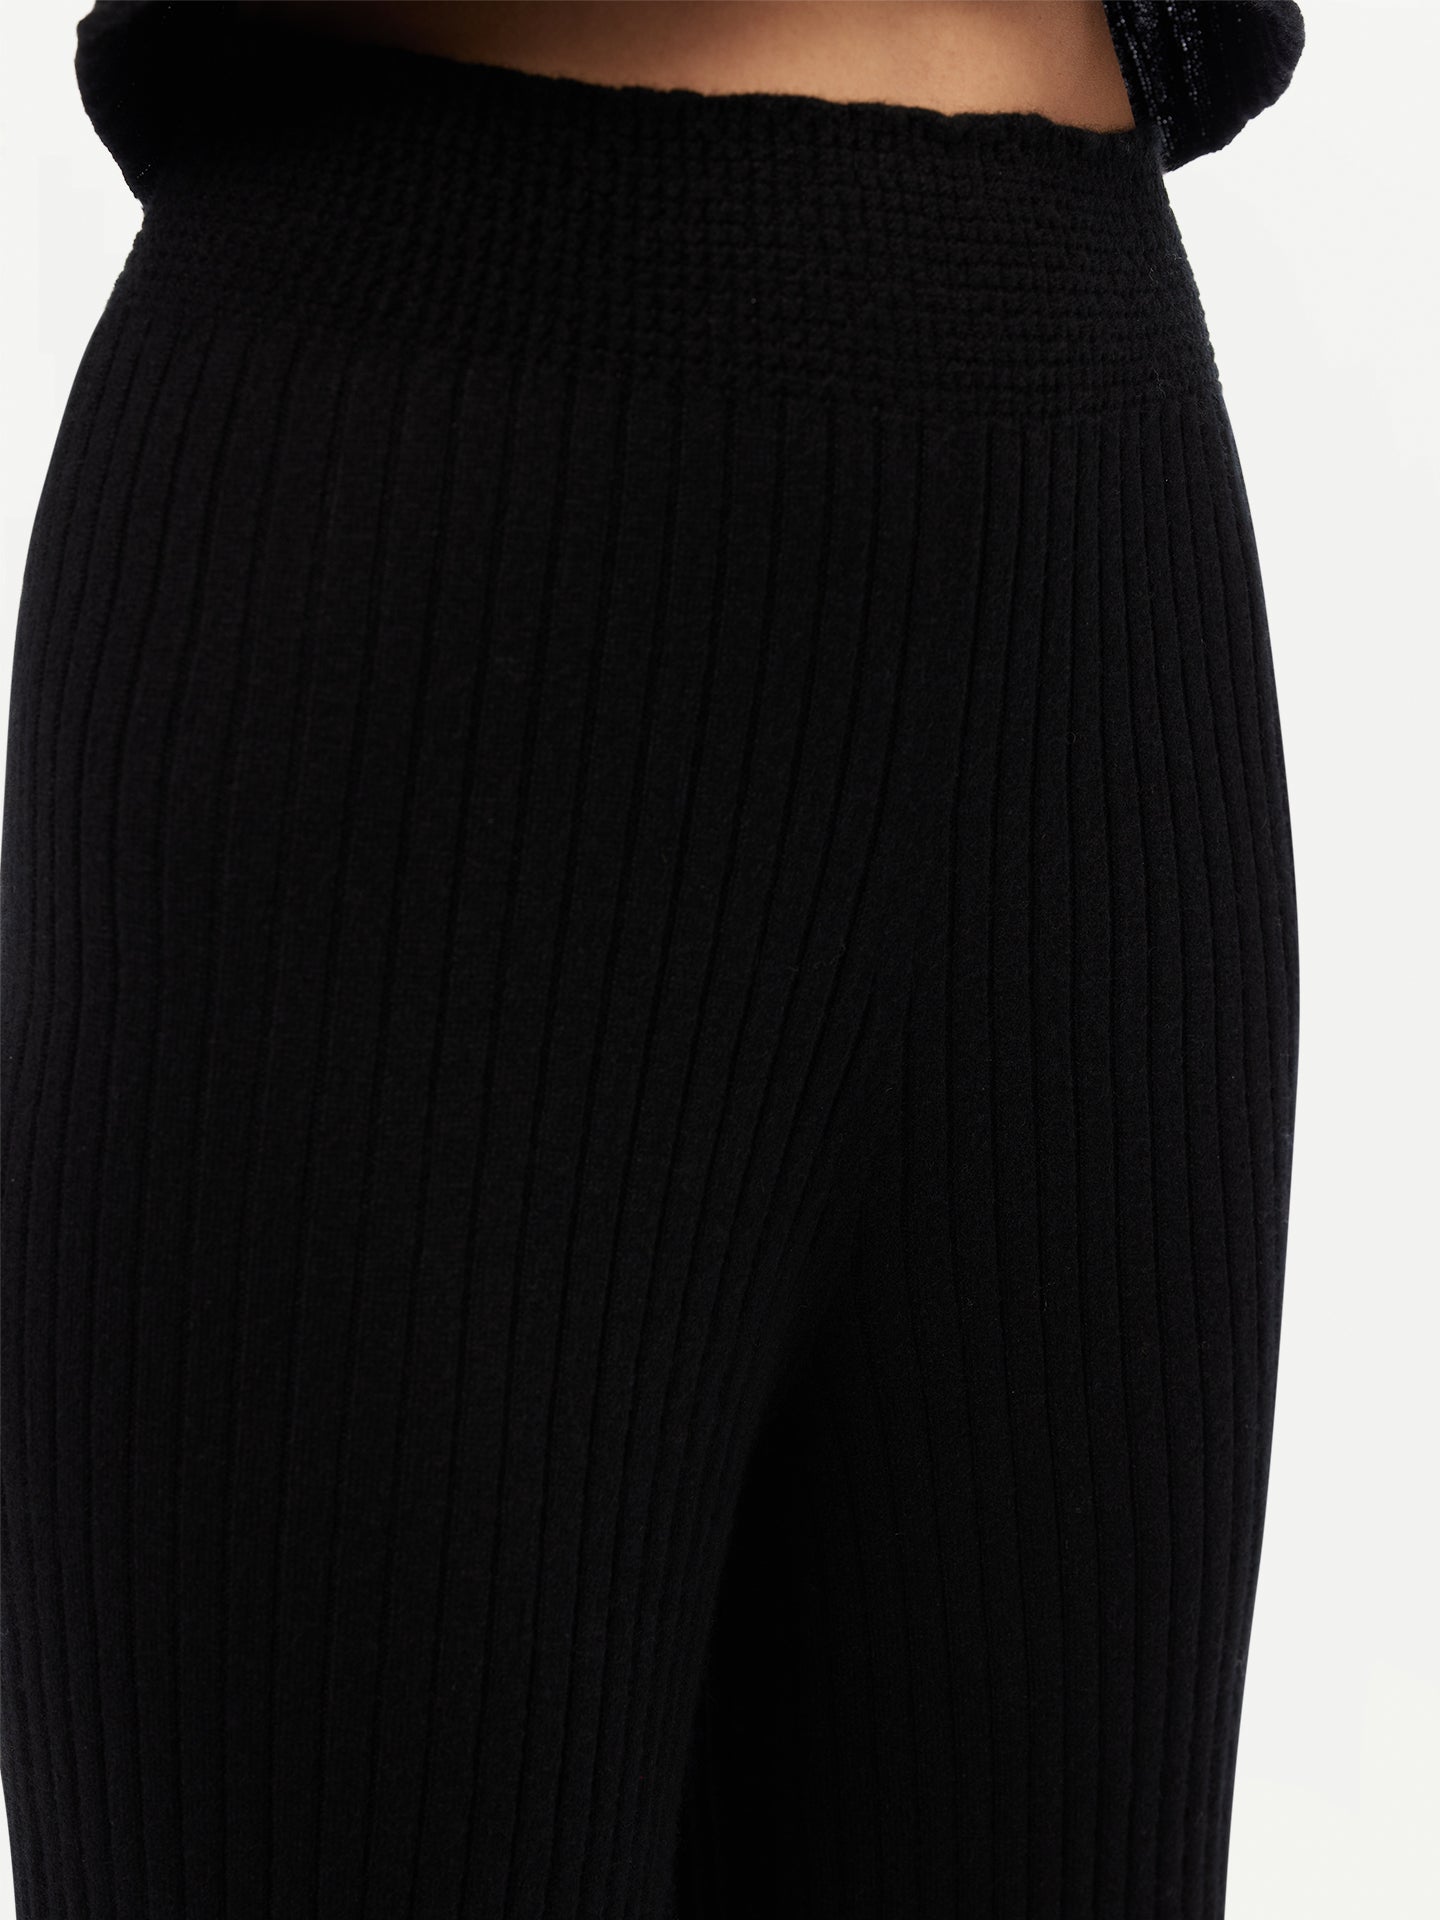 Women's Wide-Leg Cashmere Pants Black - Gobi Cashmere 